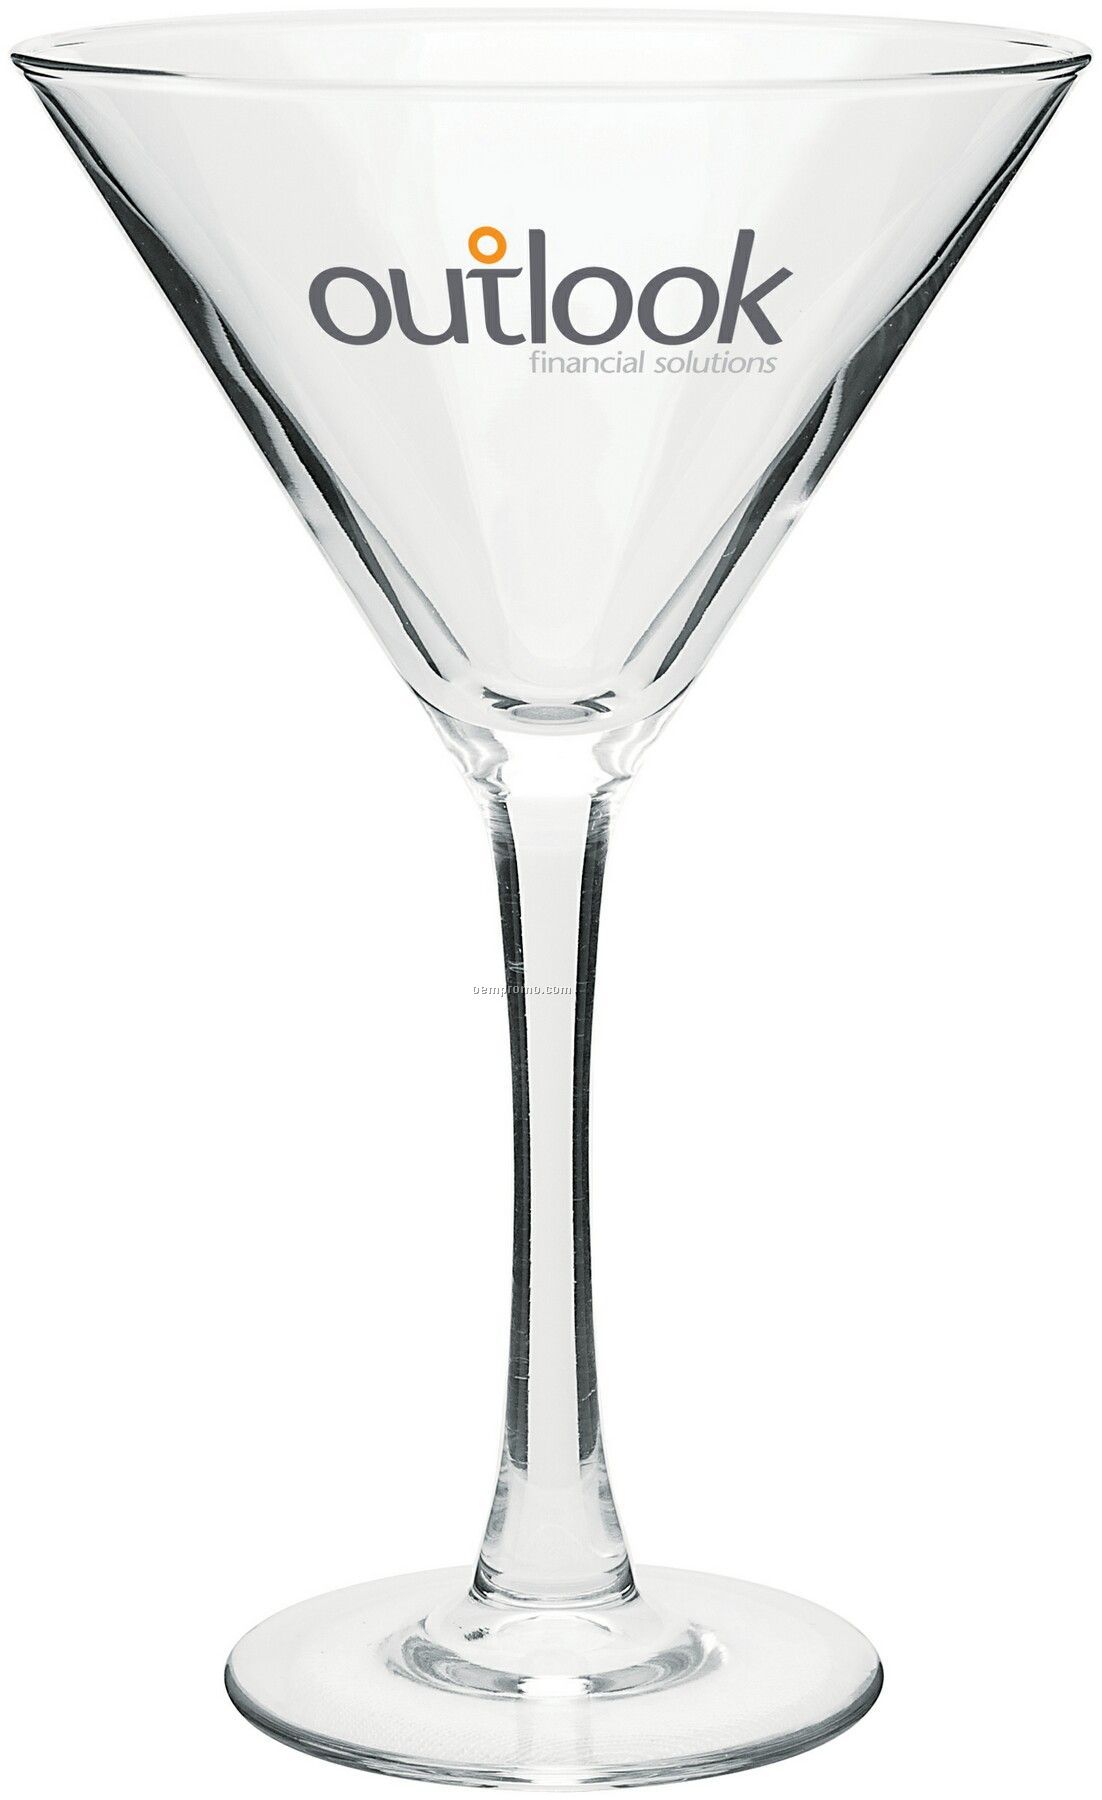 10 Oz. Signature Martini Glass